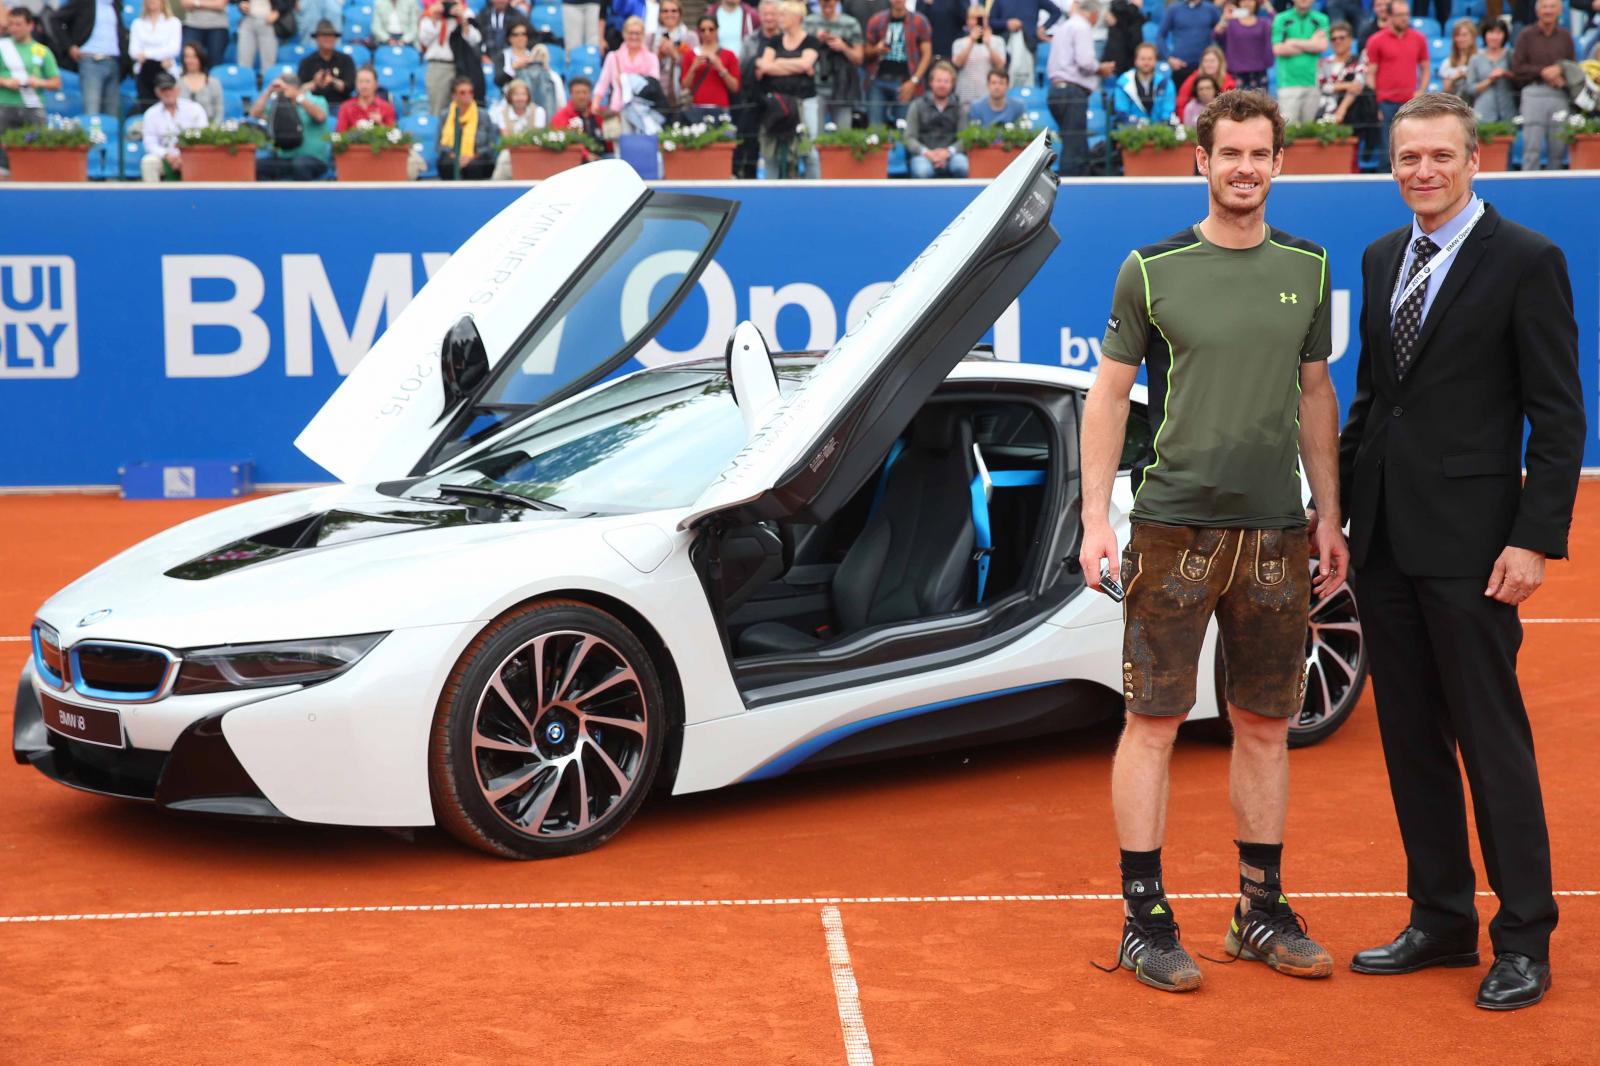 Un BMW i8 como premio para Andy Murray